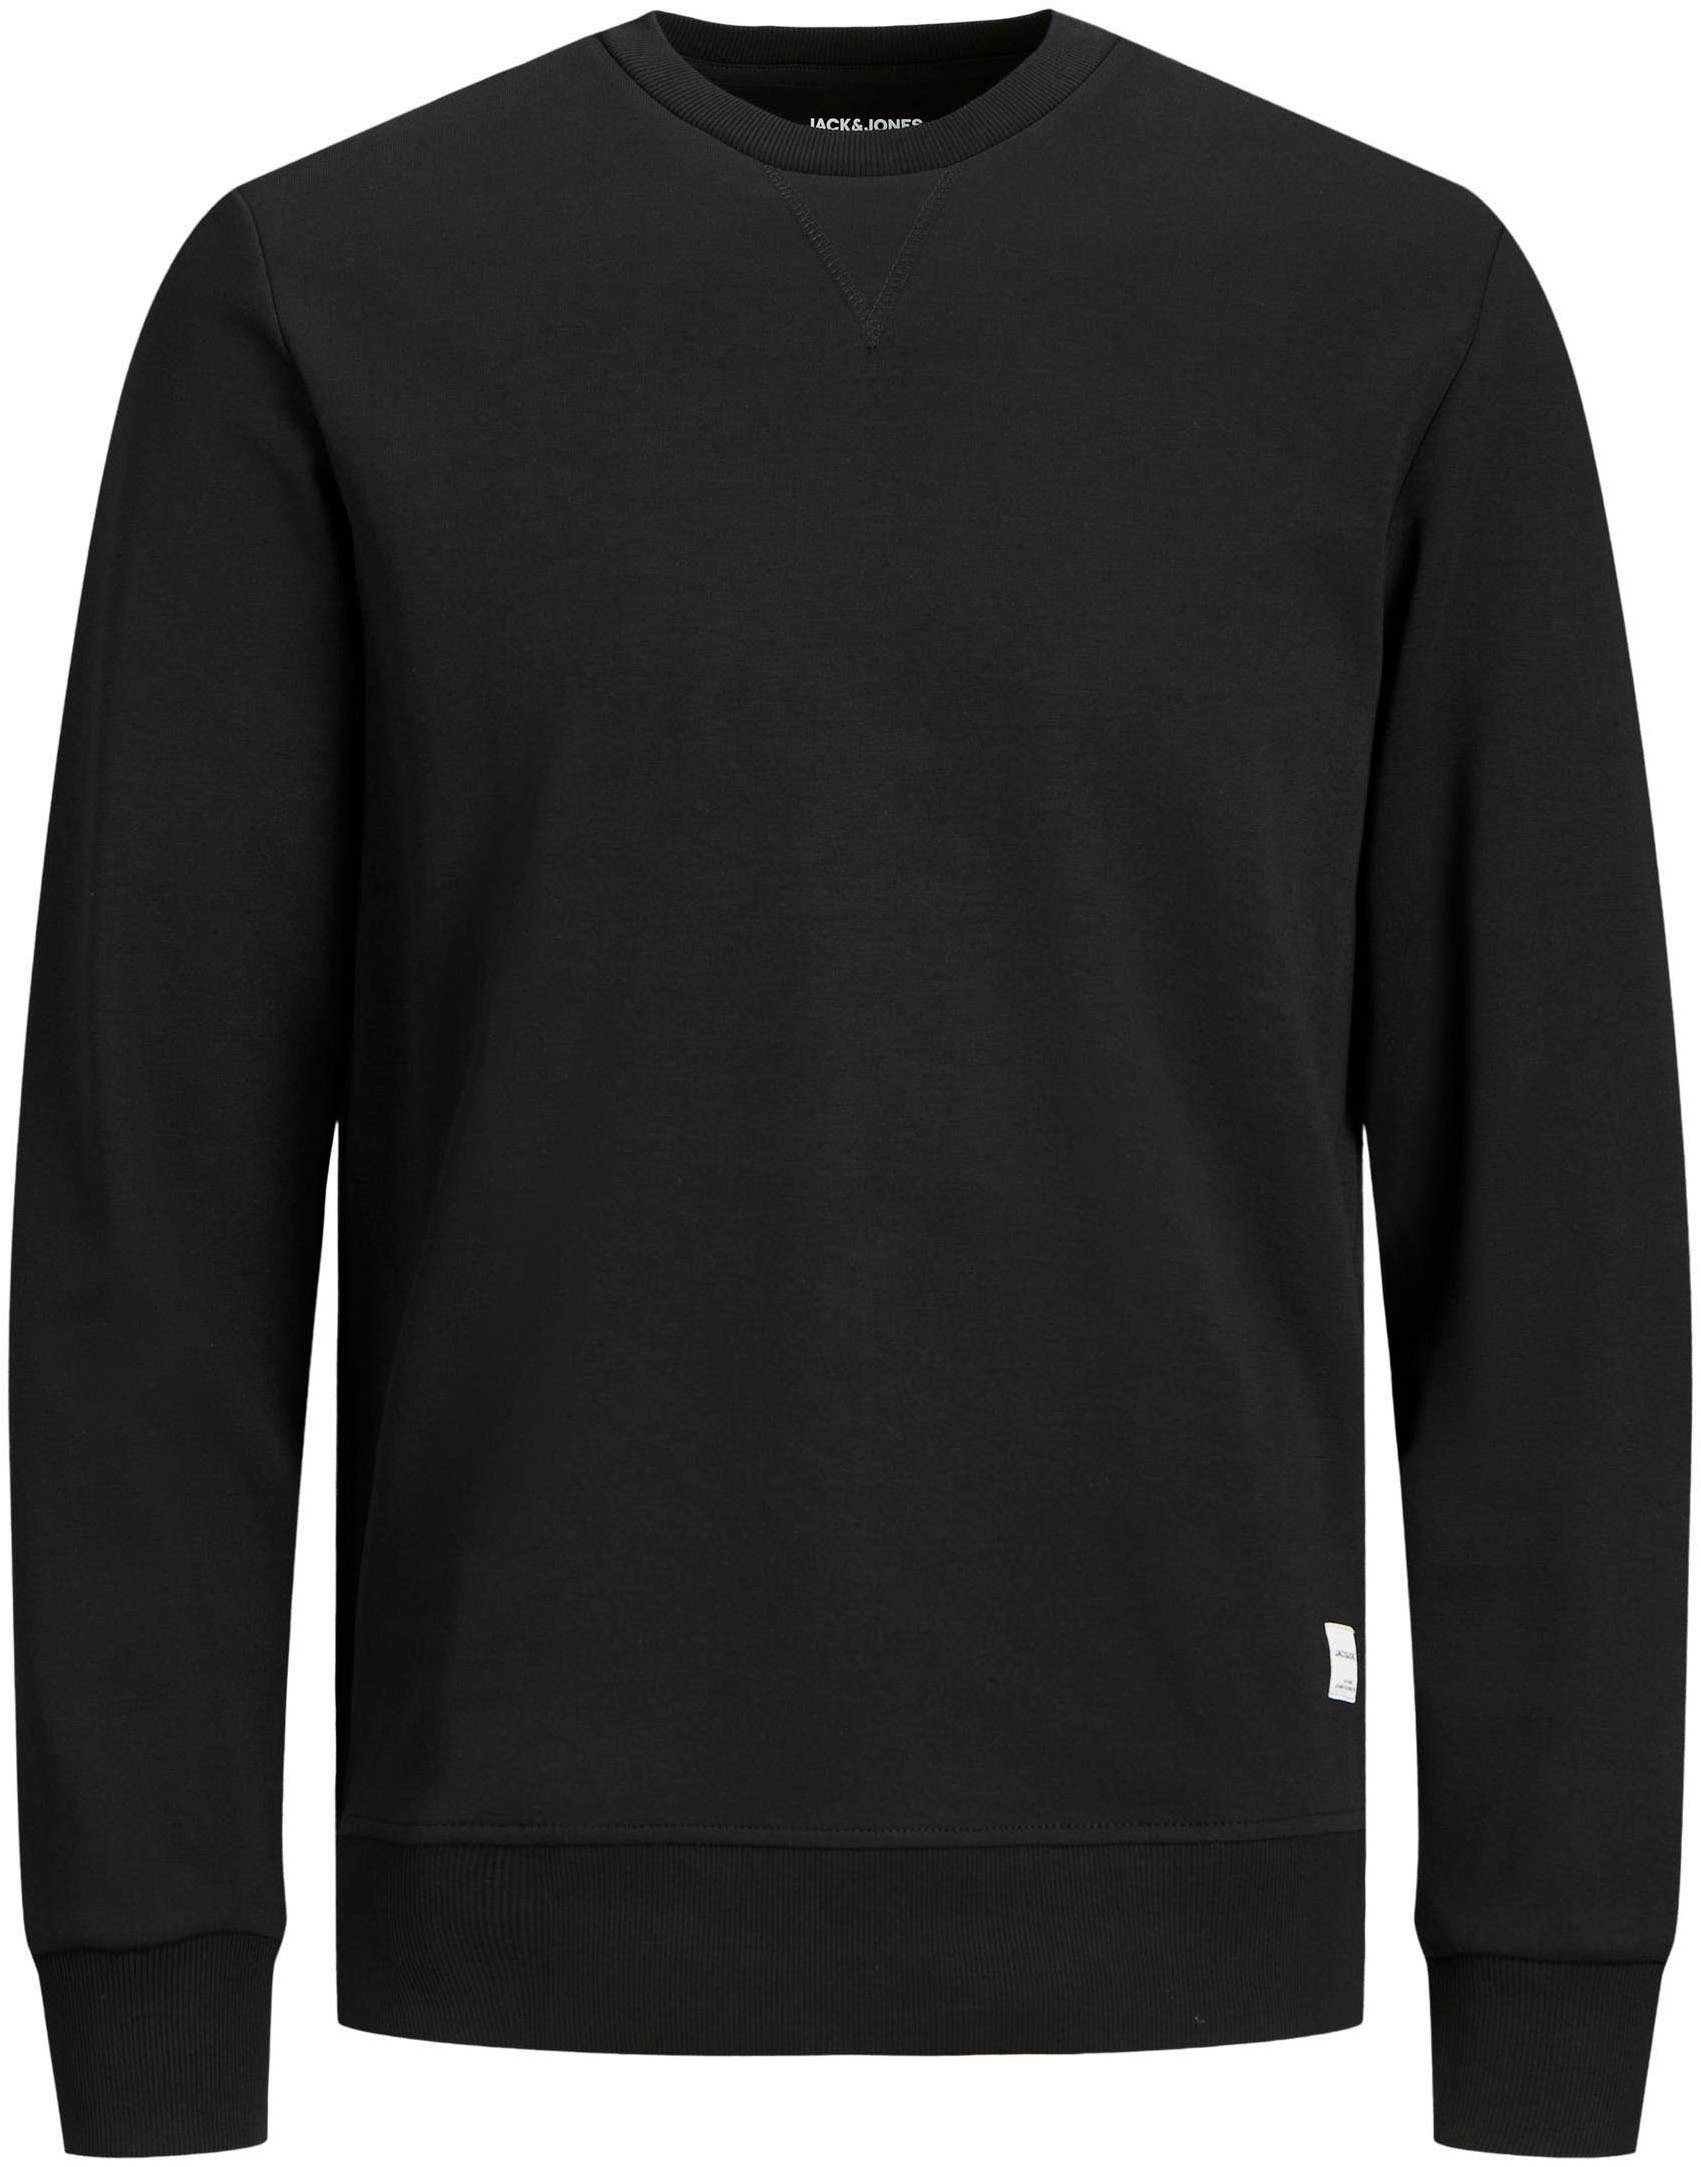 & schwarz BASIC SWEAT Sweatshirt Jack Jones